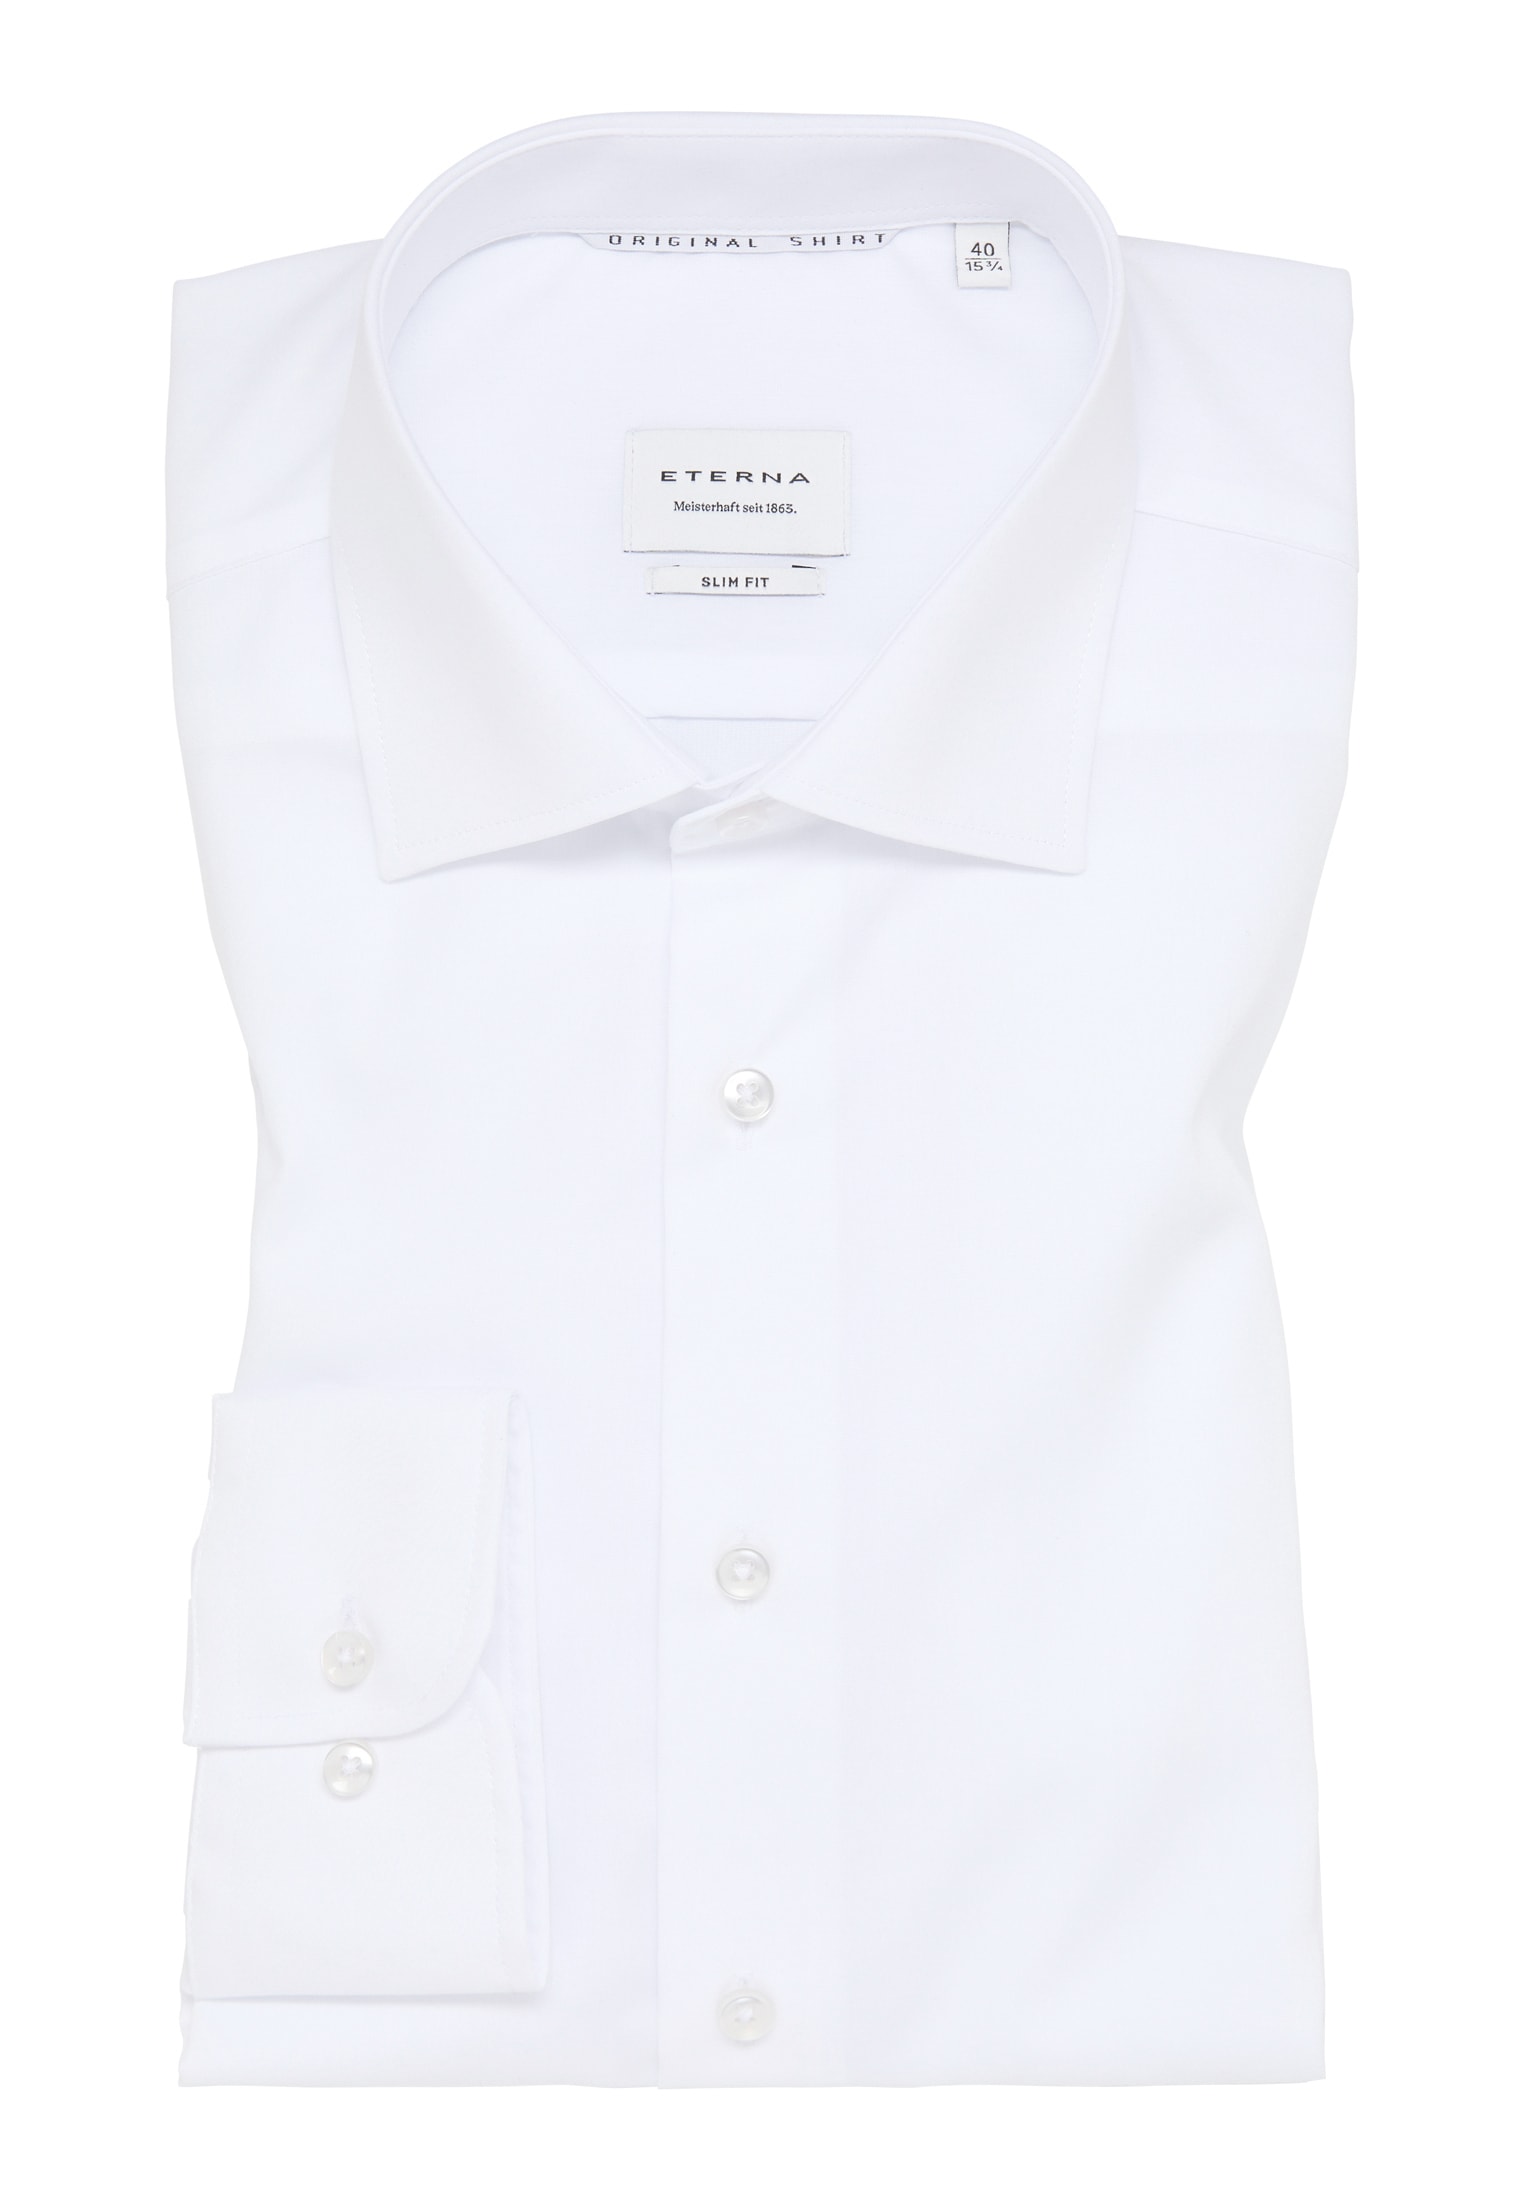 | in | Shirt 40 Langarm FIT | | unifarben Original weiß 1SH12598-00-01-40-1/1 weiß SLIM